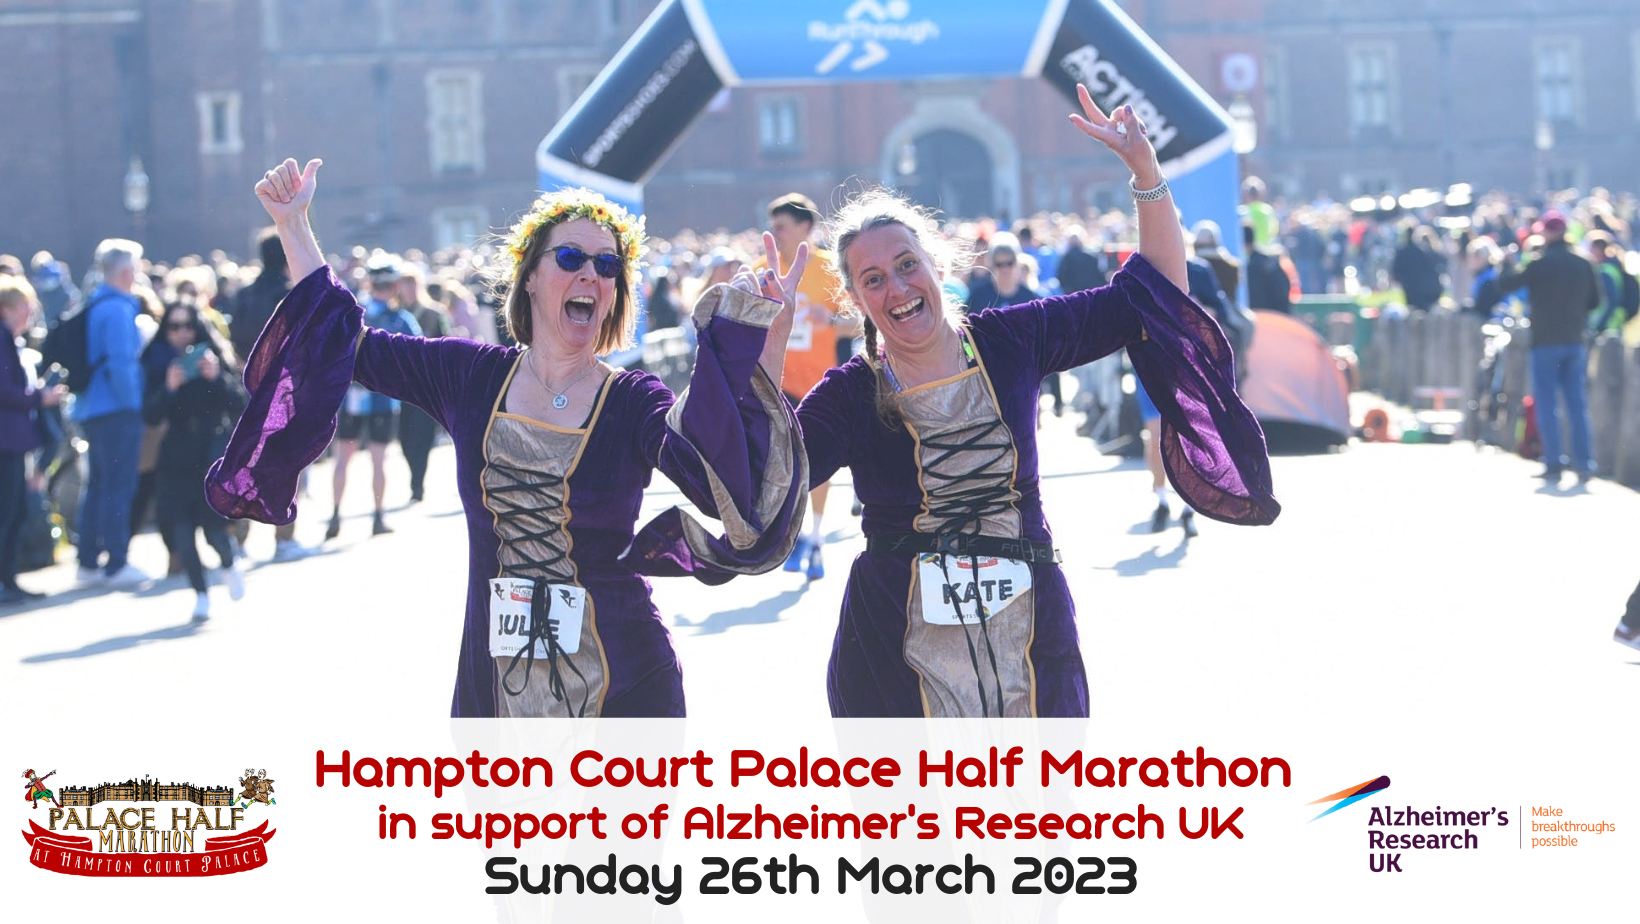 Image for RunThrough Hampton Court Palace Half Marathon